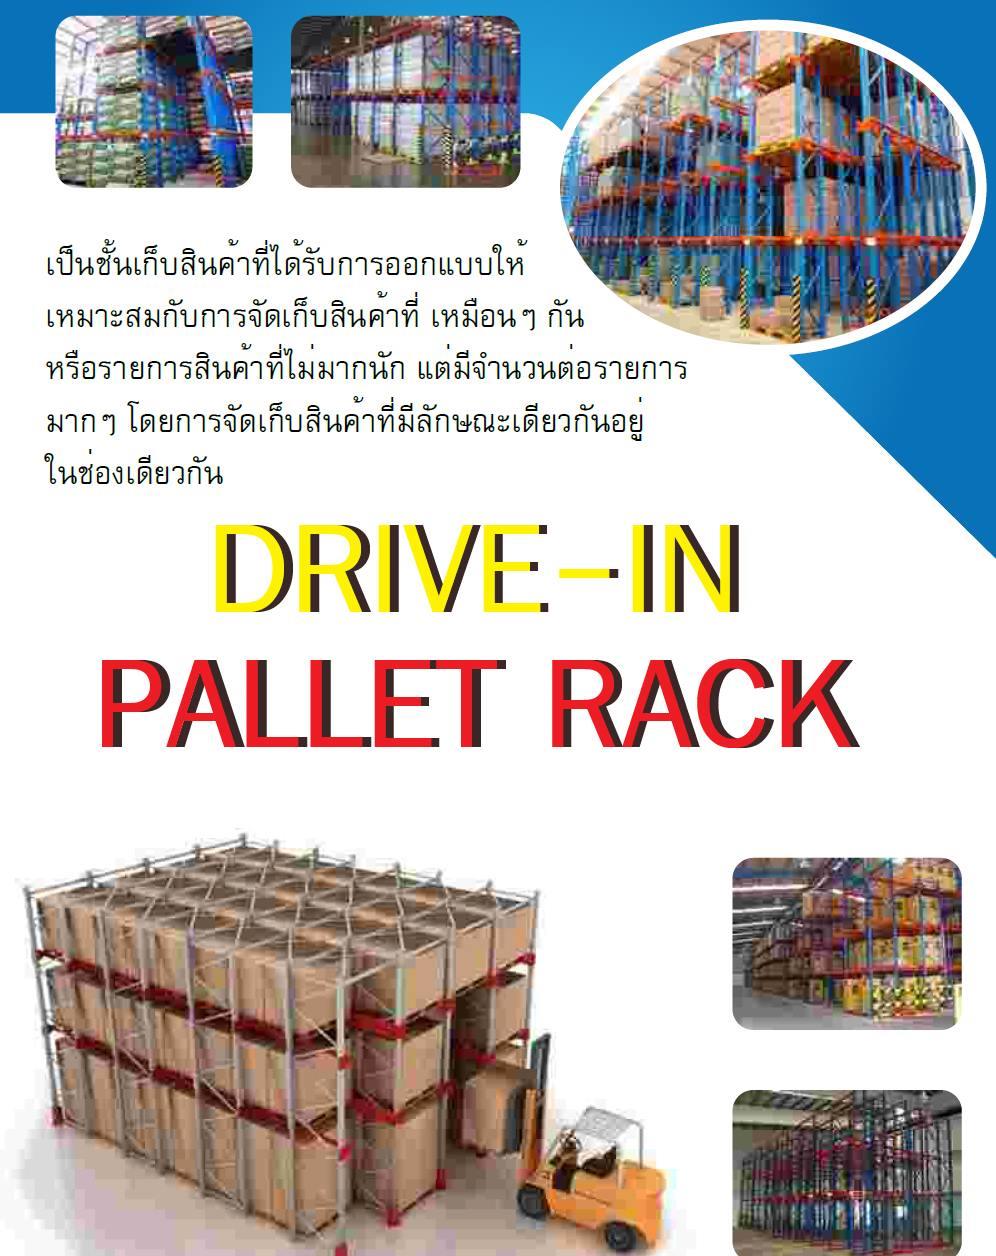 Drive-In Pallet Racks,#DriveInPalletRack #DriveInRack #PalletRack #rack #racksystem #microrack #ชั้นวาง #logistic #โลจิสติก #warehouse #โรงงาน #คลังสินค้า,,Materials Handling/Racks and Shelving